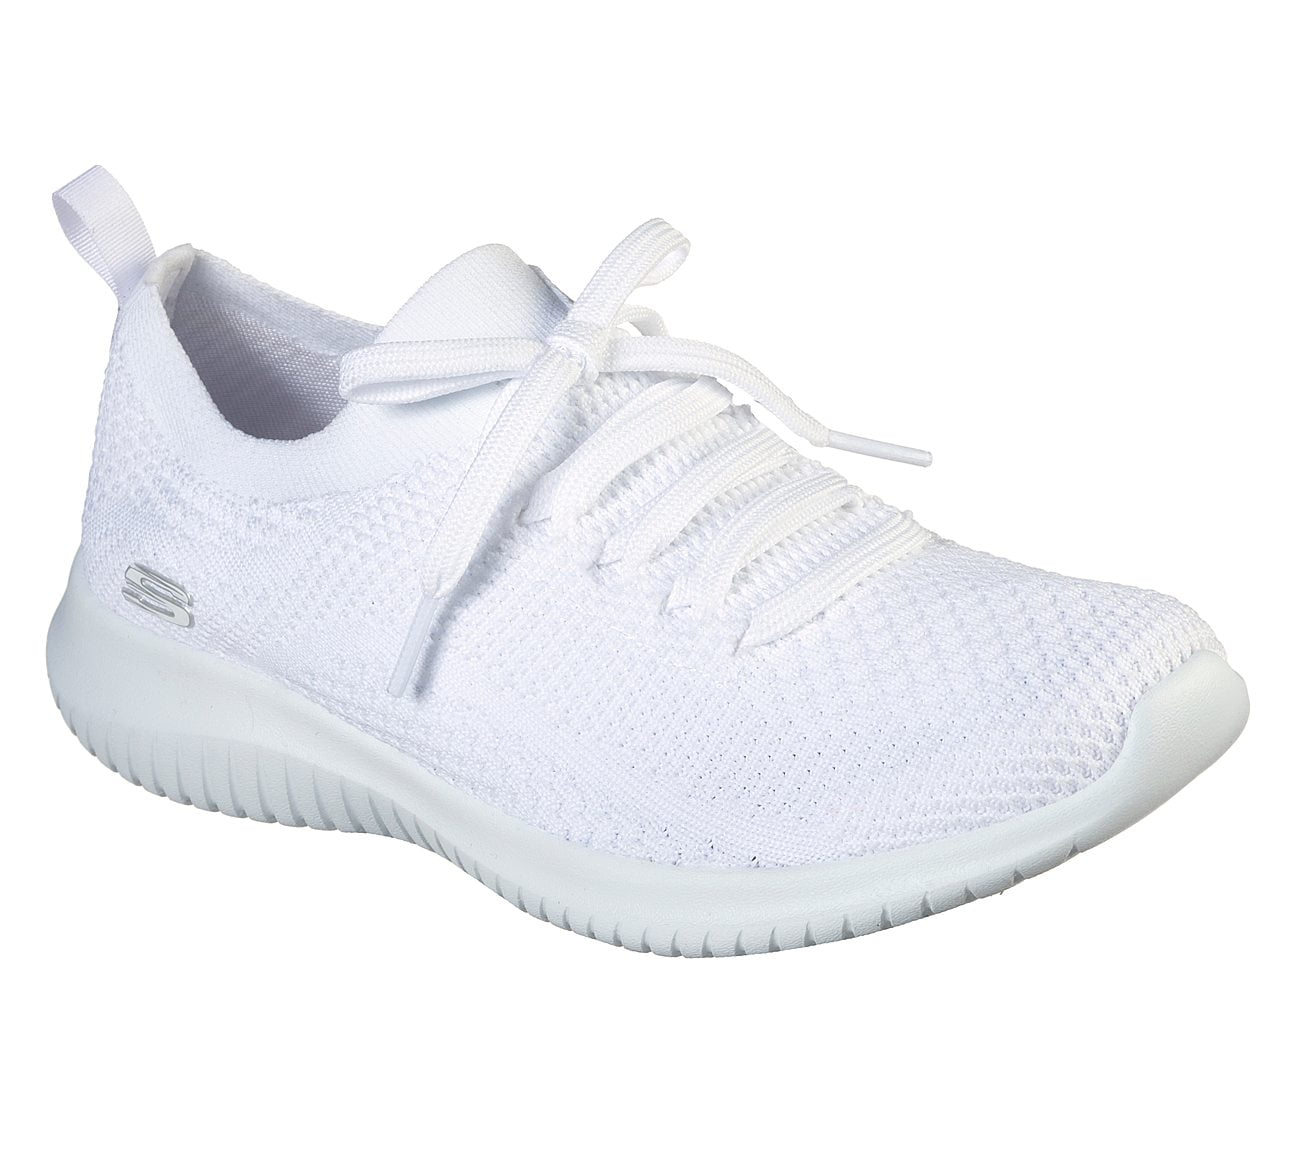 kvælende lugt sundhed Skechers Women's Ultra Flex - Statements Sneaker, White/Silver, 8 M US -  Walmart.com